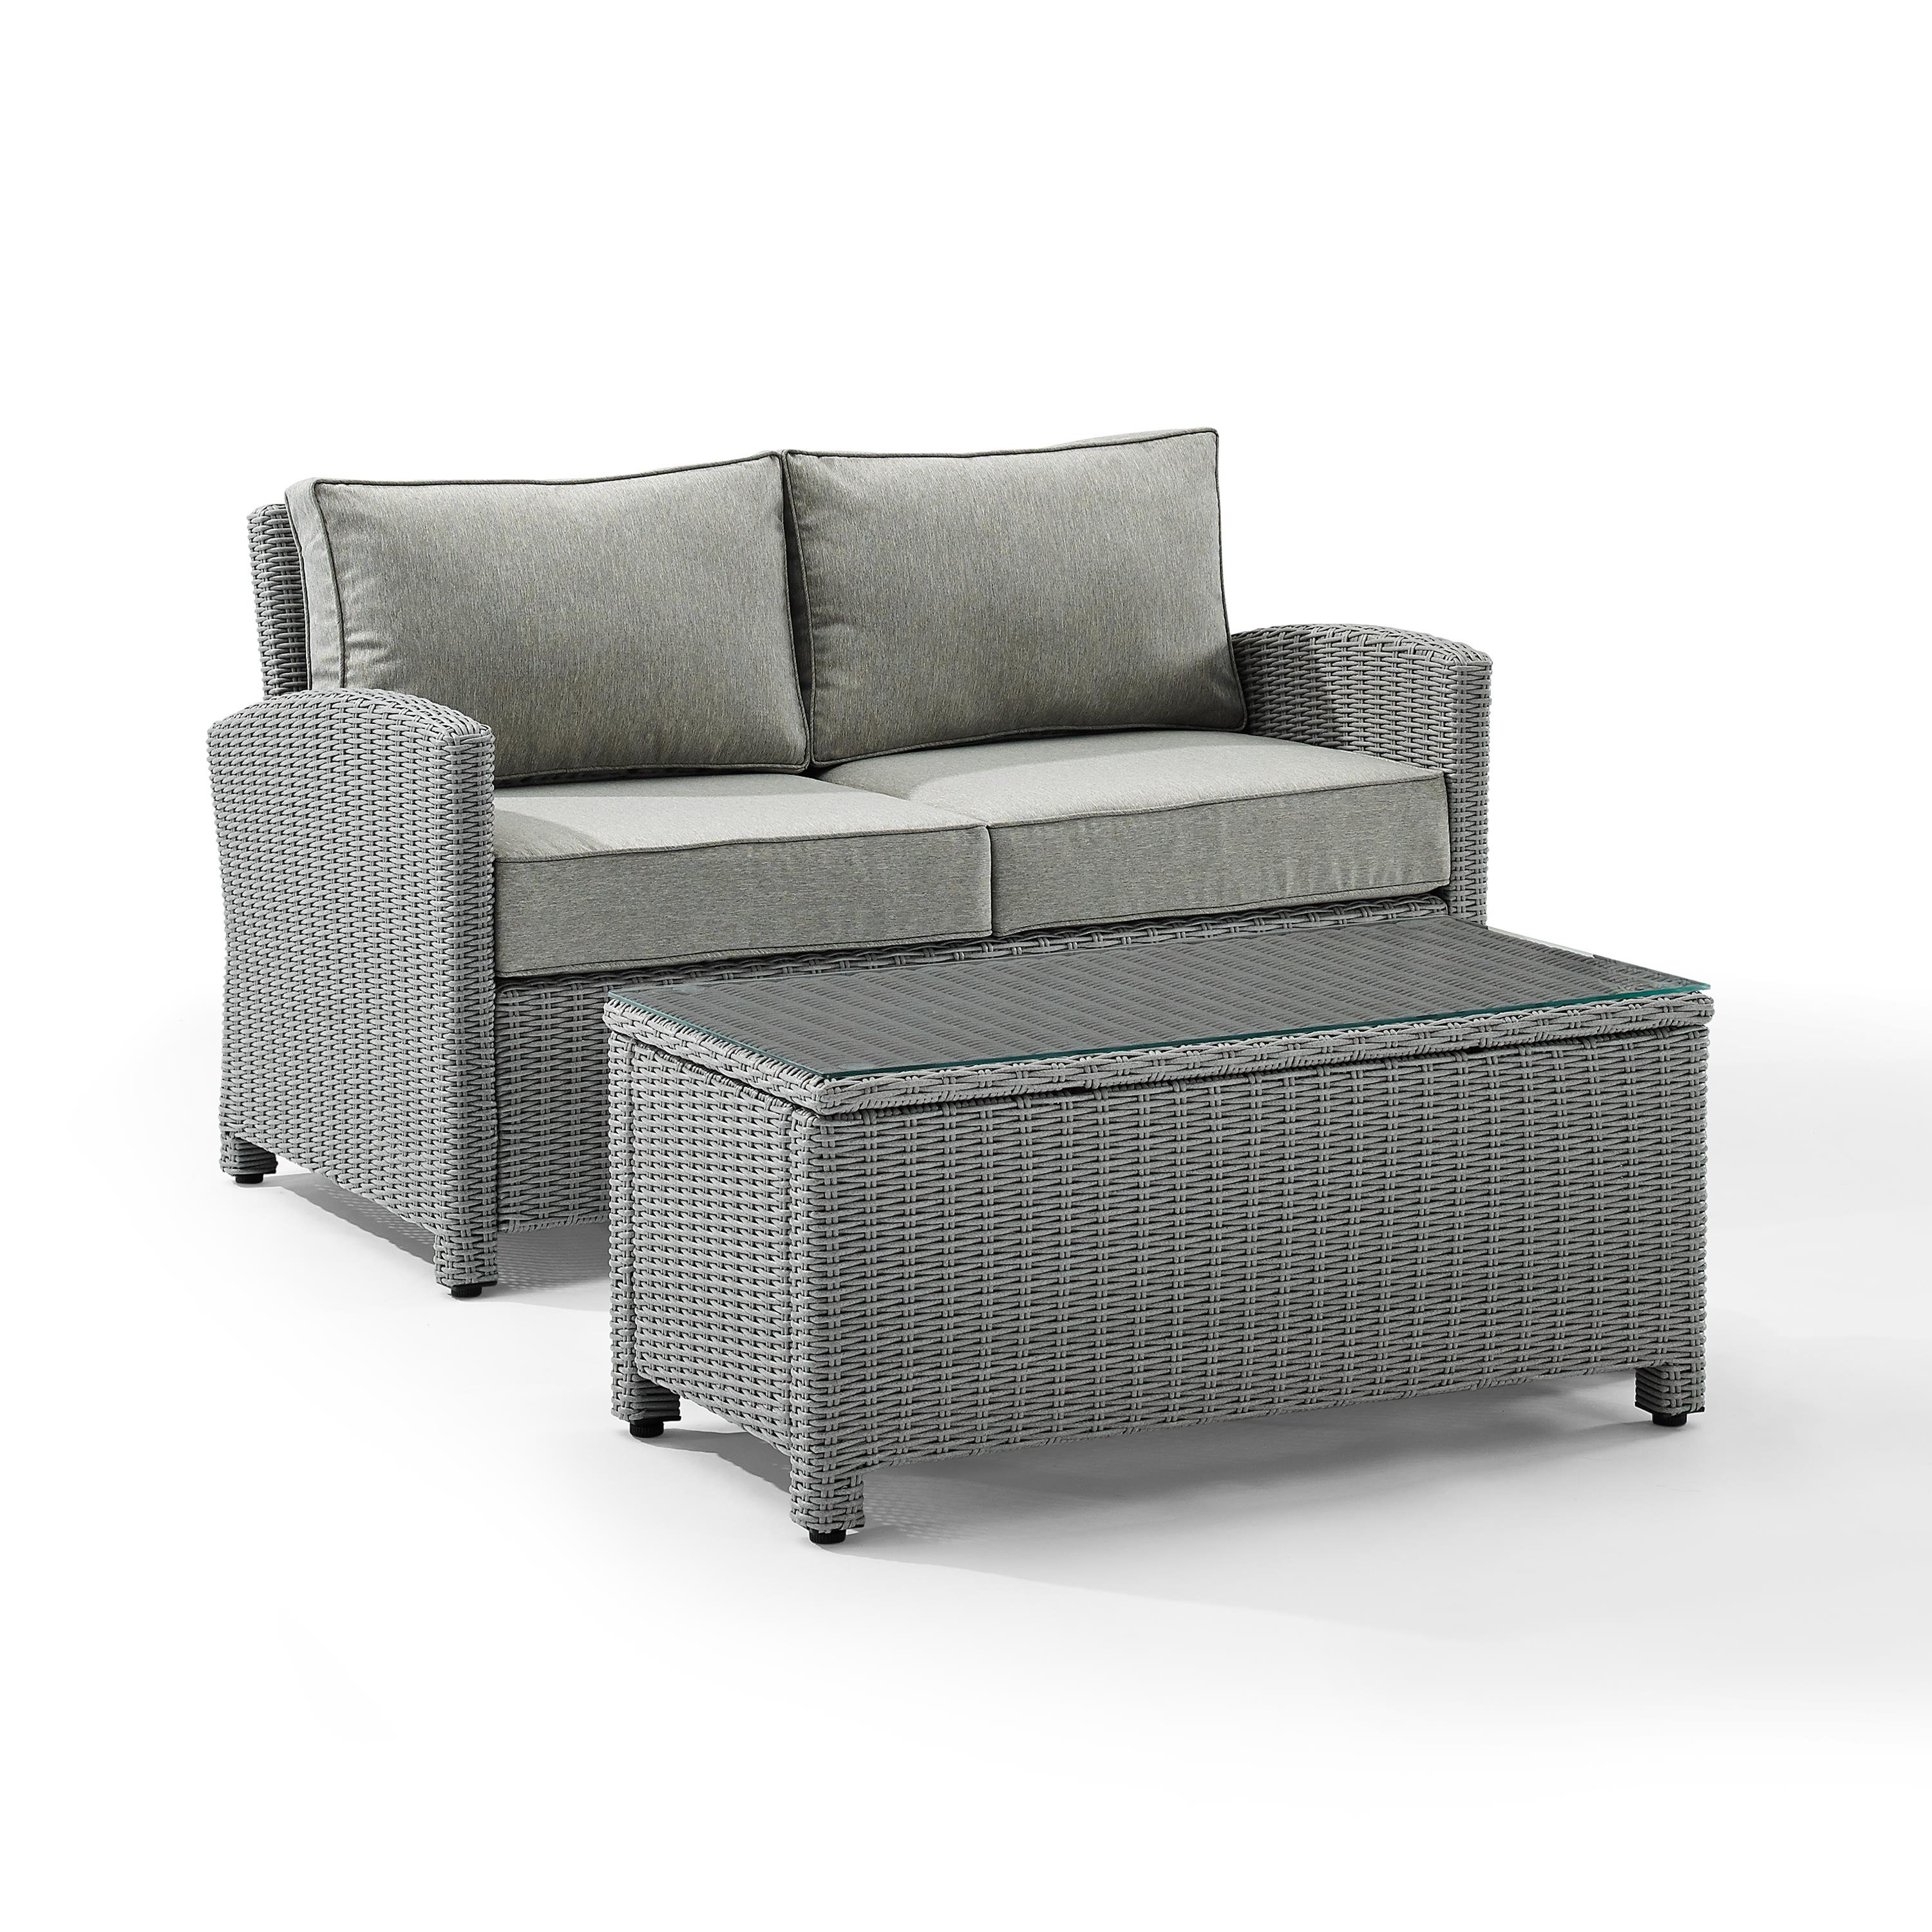 Crosley Bradenton 2 Piece Wicker Patio Sofa Set in Gray - image 2 of 7